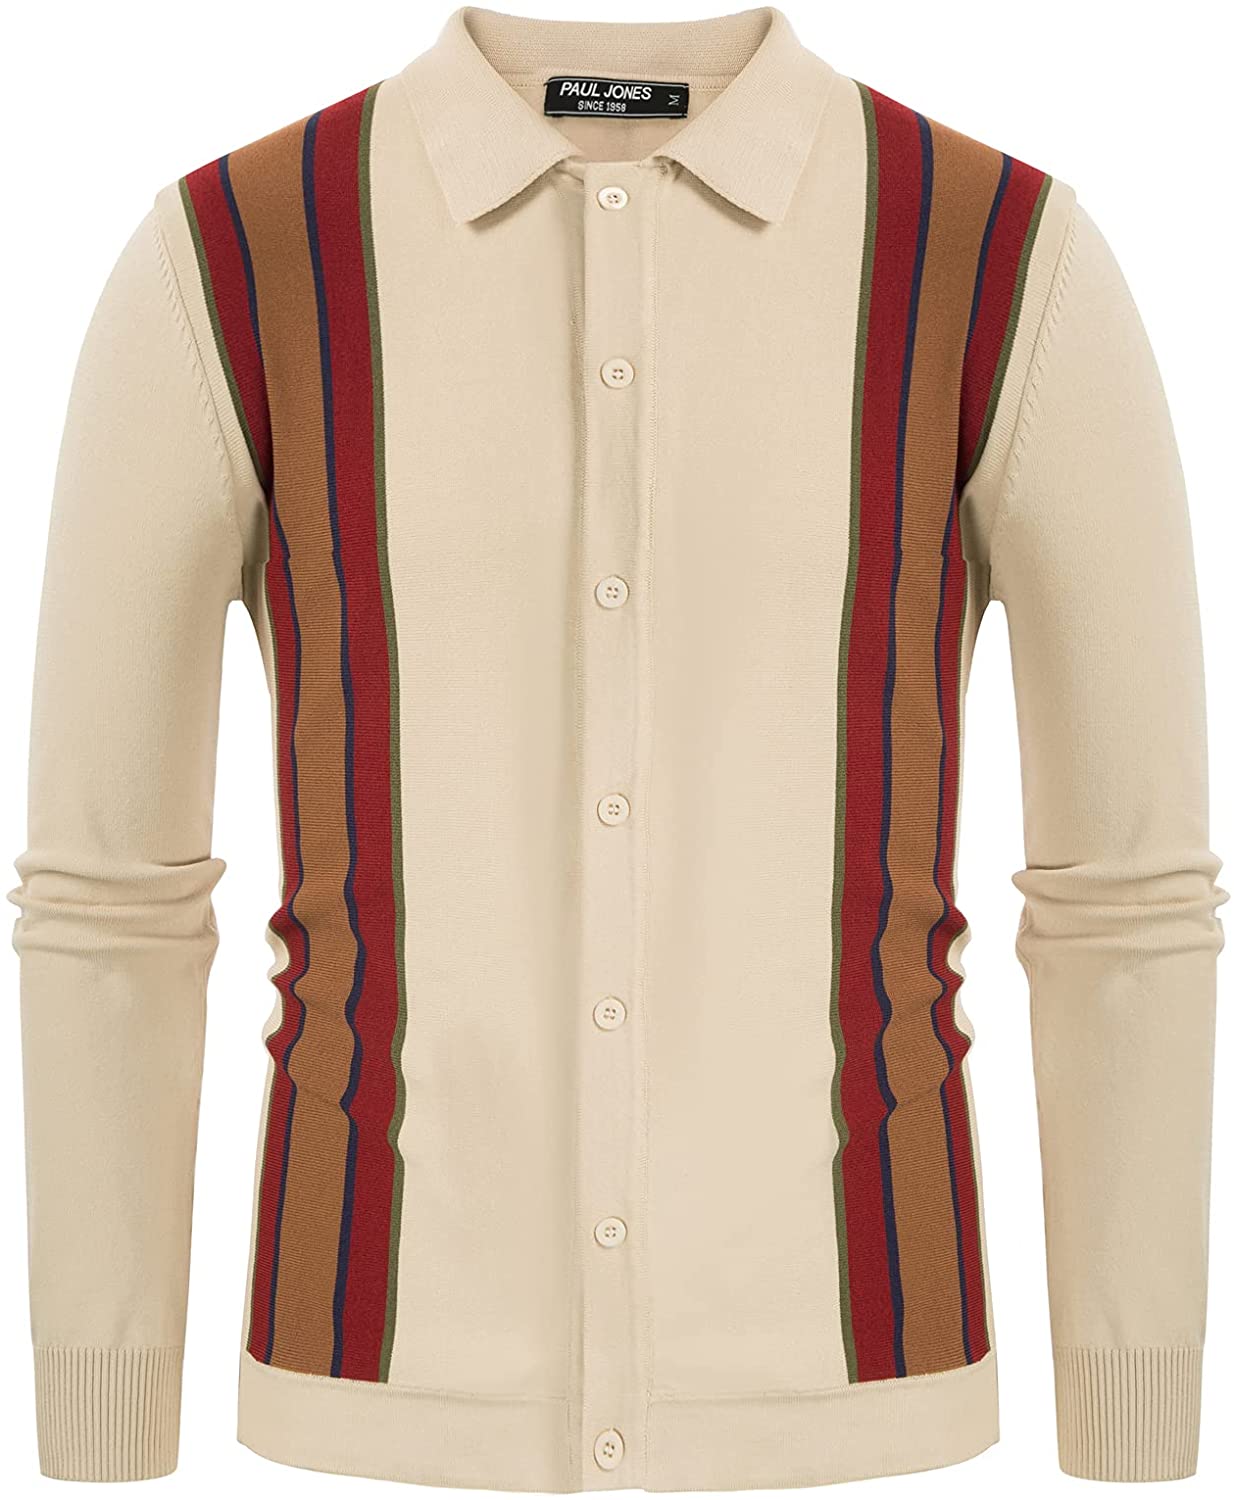 PBNBP Polo Shirts for Men,Men's Polo Shirt Vintage Short Sleeve Knit Shirt  Casual Lightweight Business Shirt Striped Print Shirts 